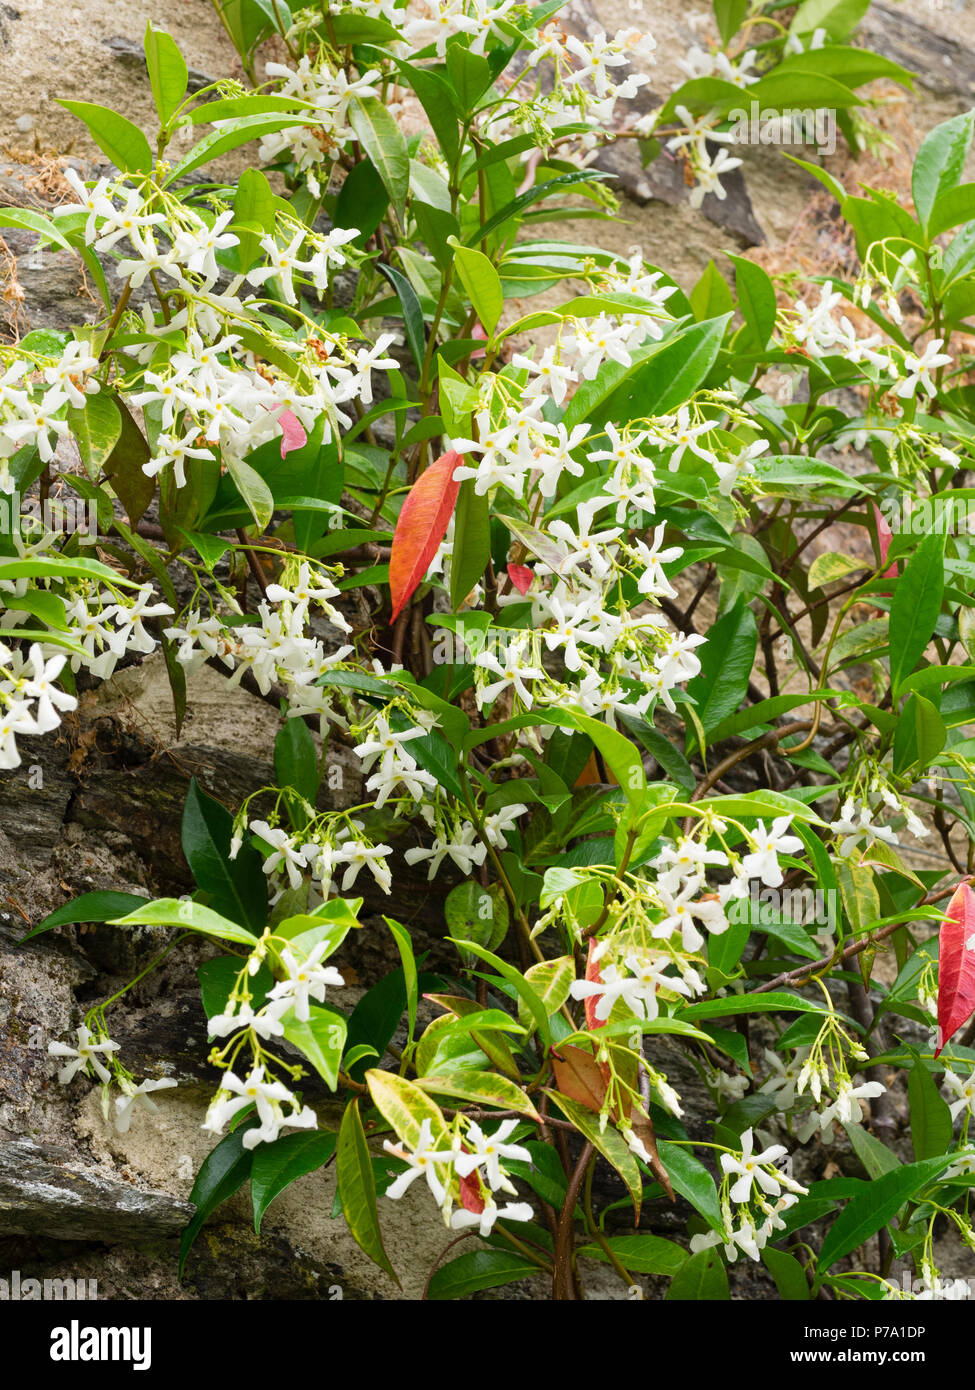 Scented white summer flowers of the evergreen climber, Trachelospermum jasminoides, the star jasmine Stock Photo